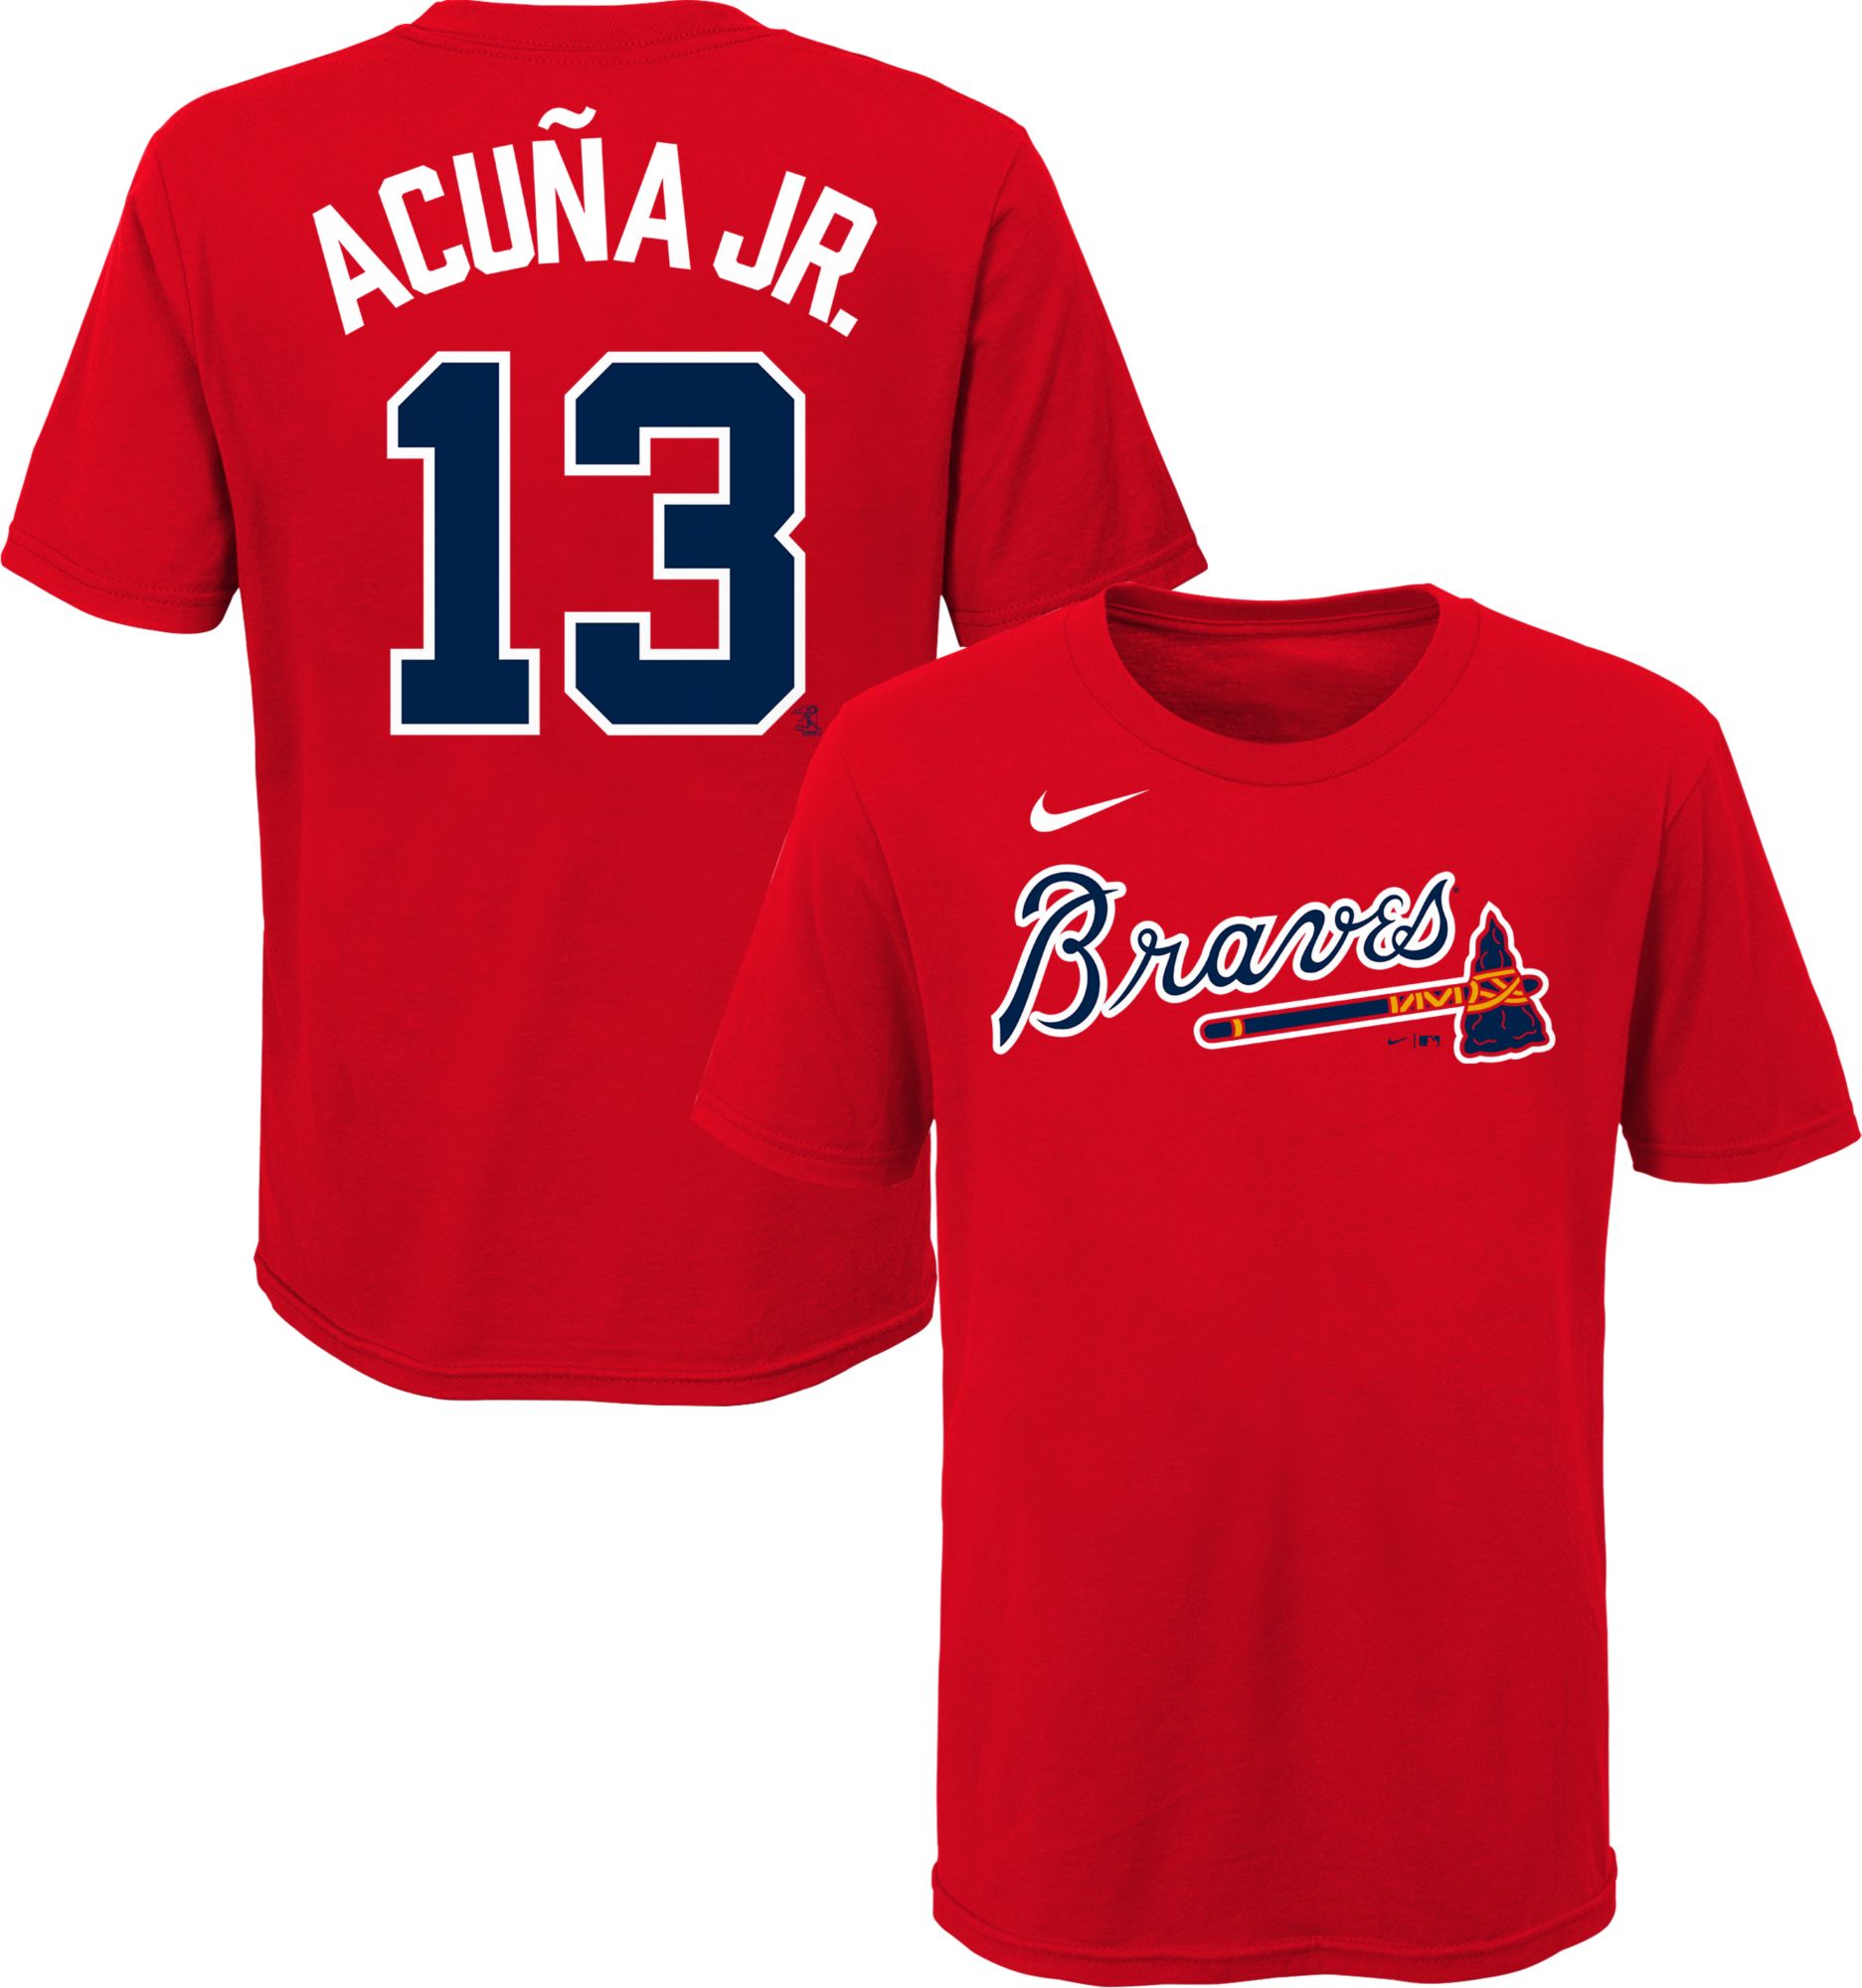 Nike / Youth Atlanta Braves Ronald Acuna Jr. #13 Red T-Shirt